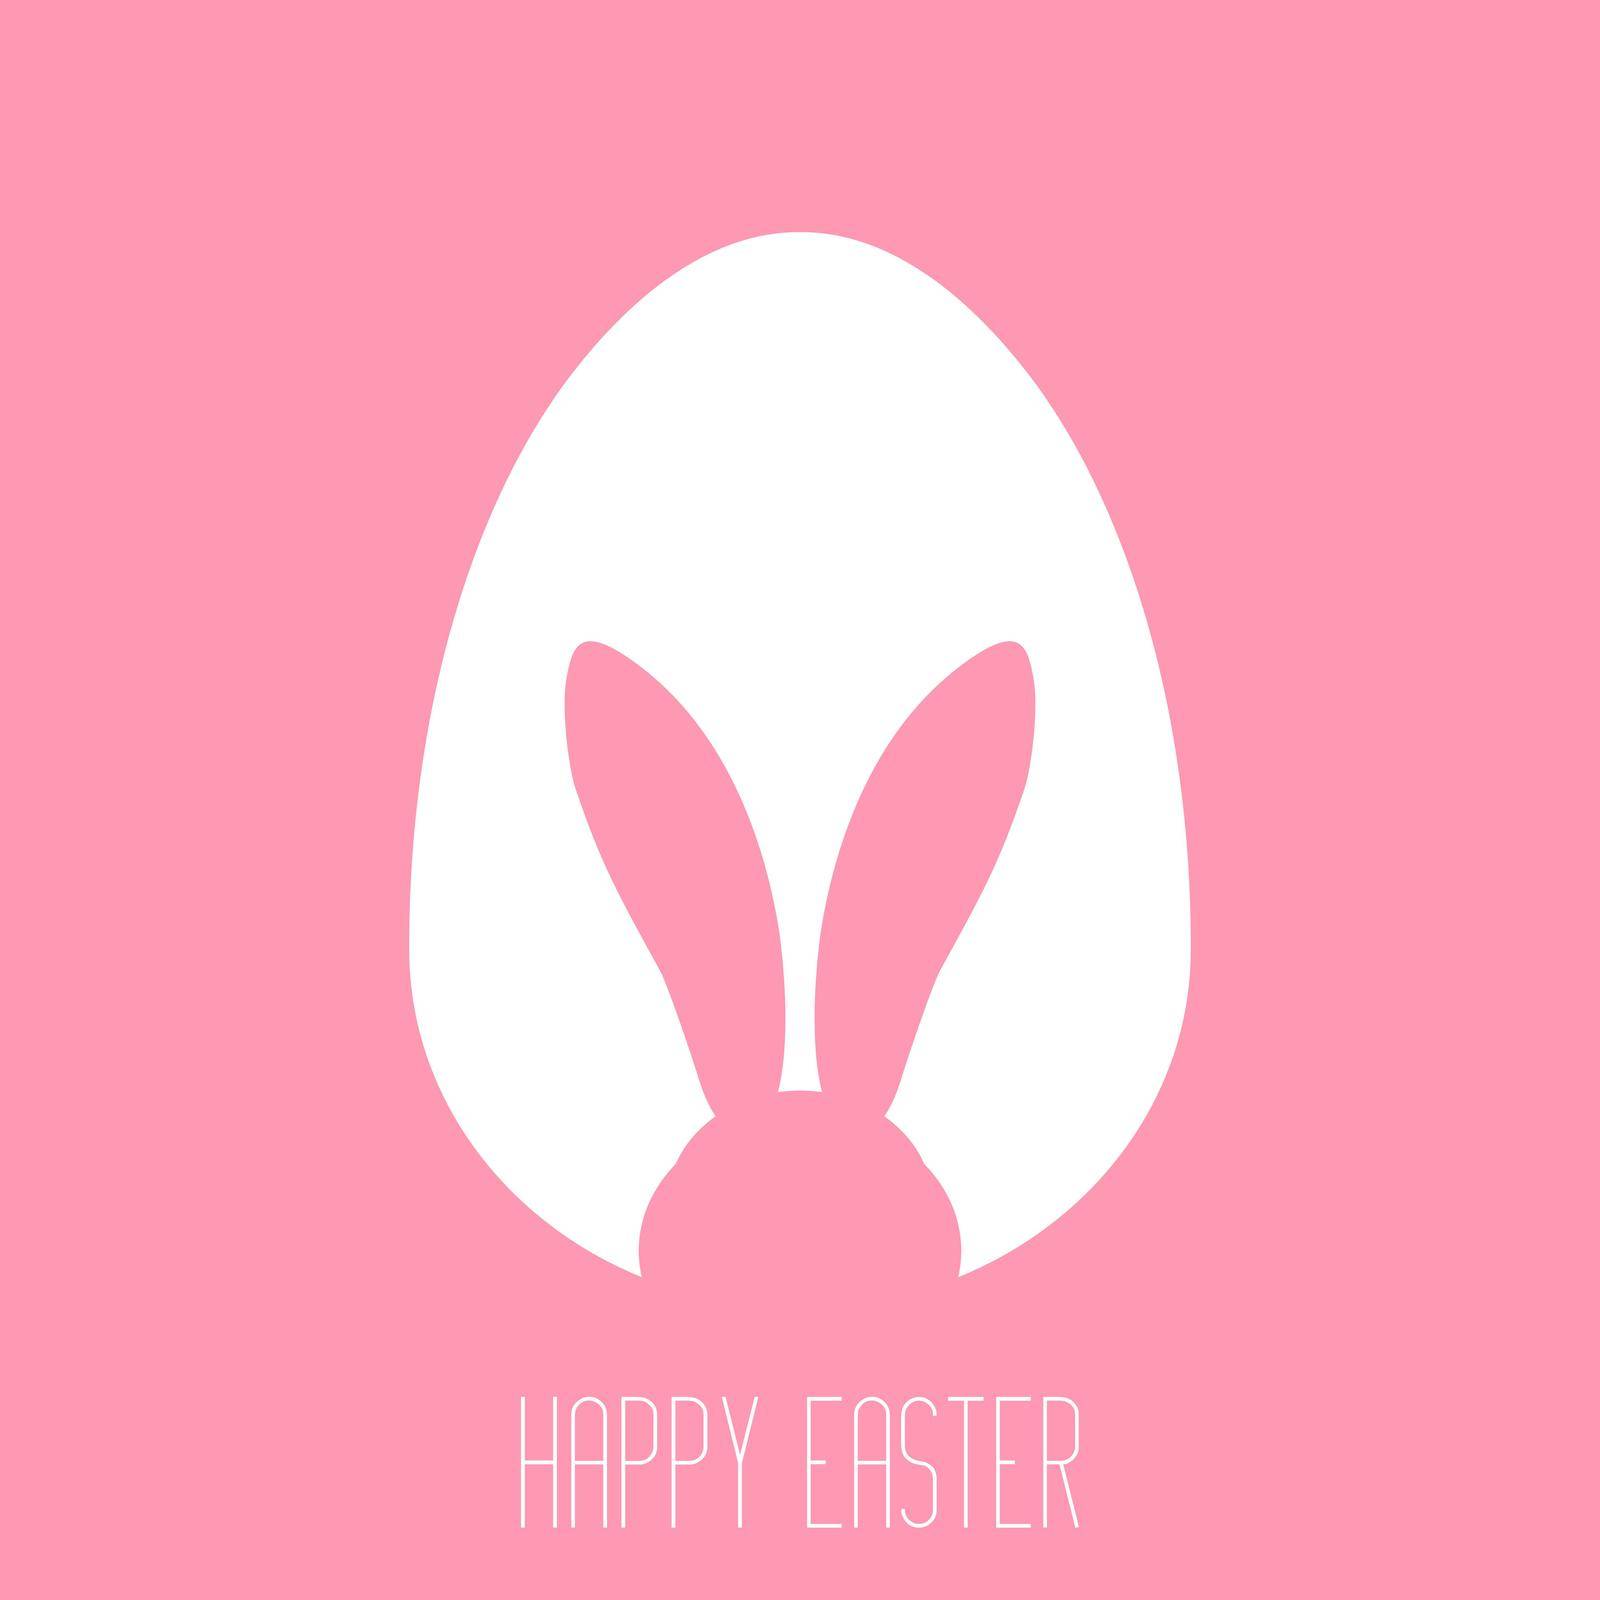 Easter egg shape with bunny ears silhouette by Valeriya_Dor